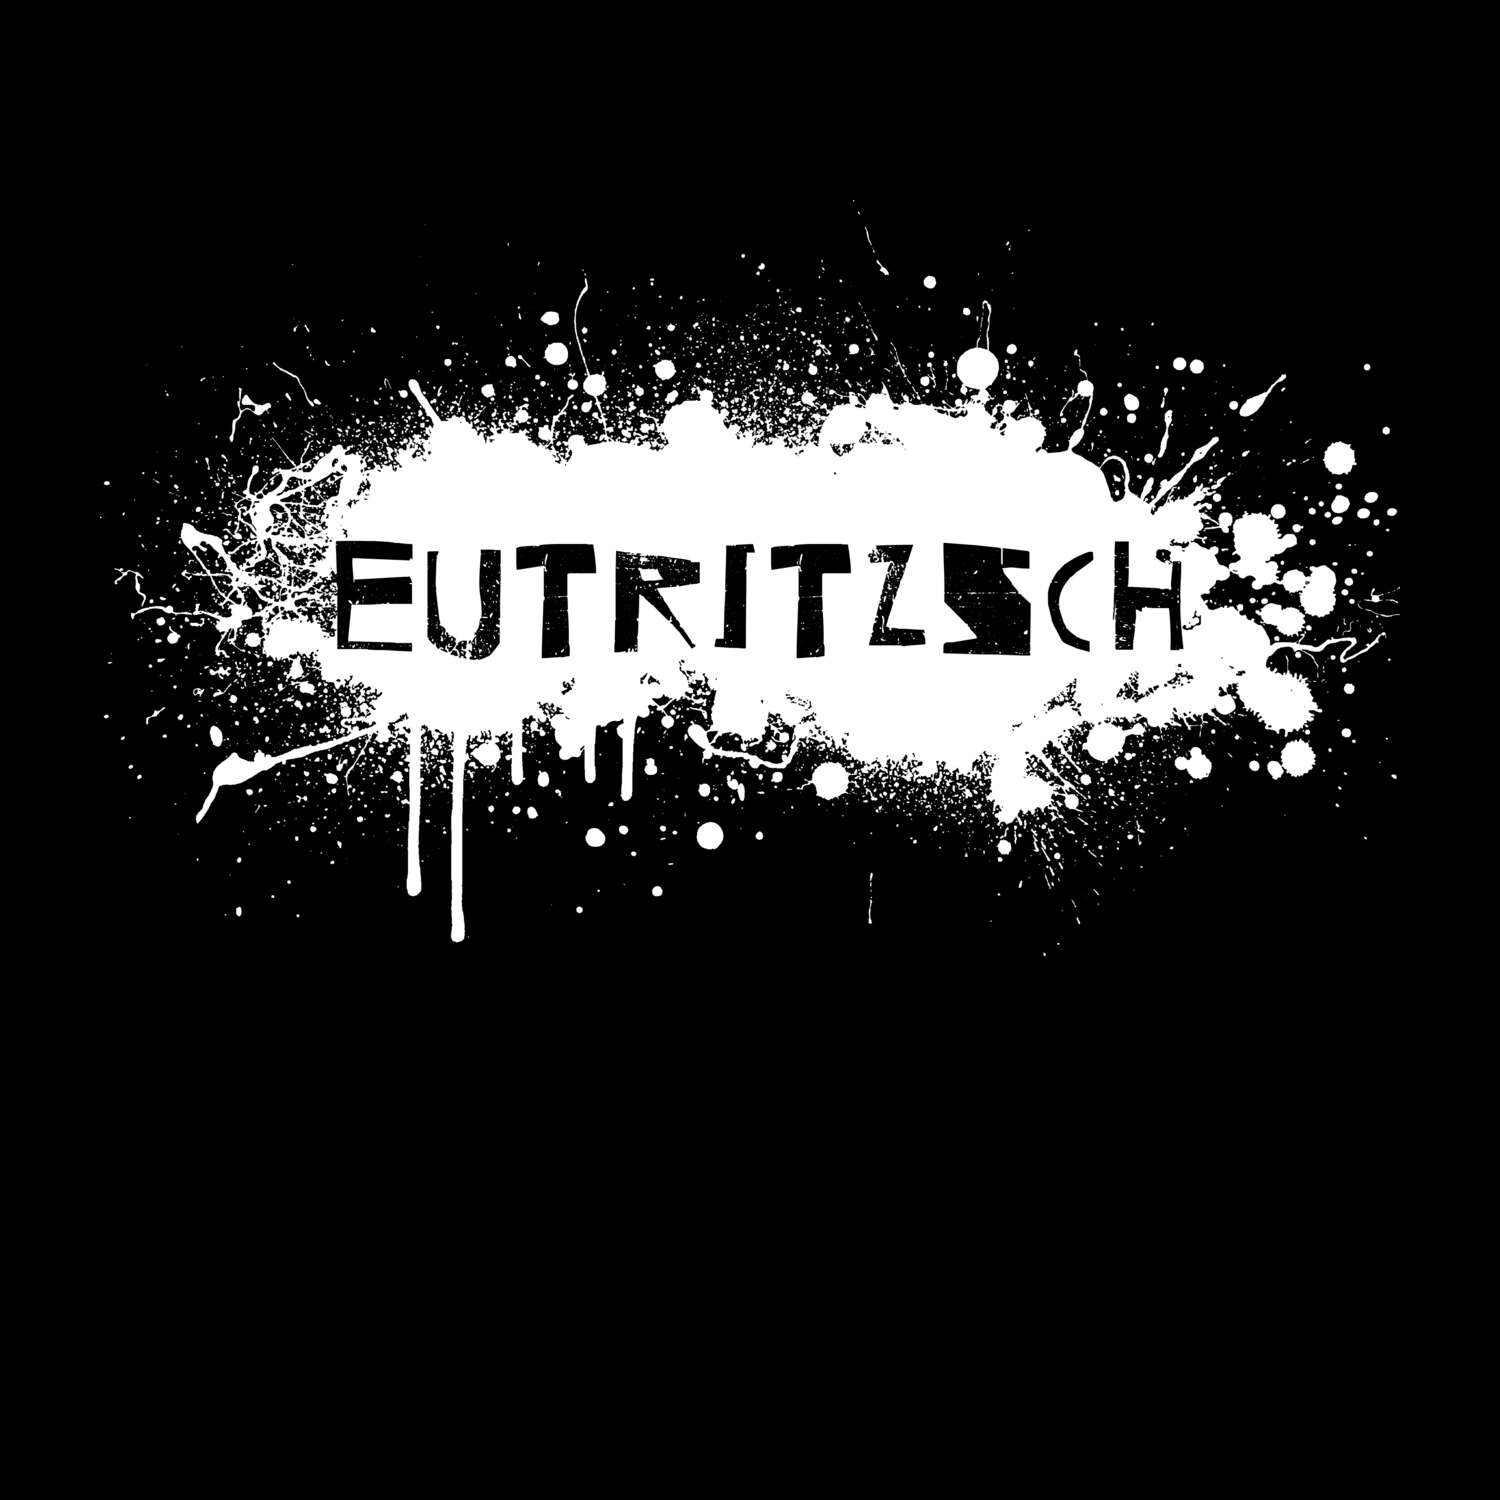 Eutritzsch T-Shirt »Paint Splash Punk«